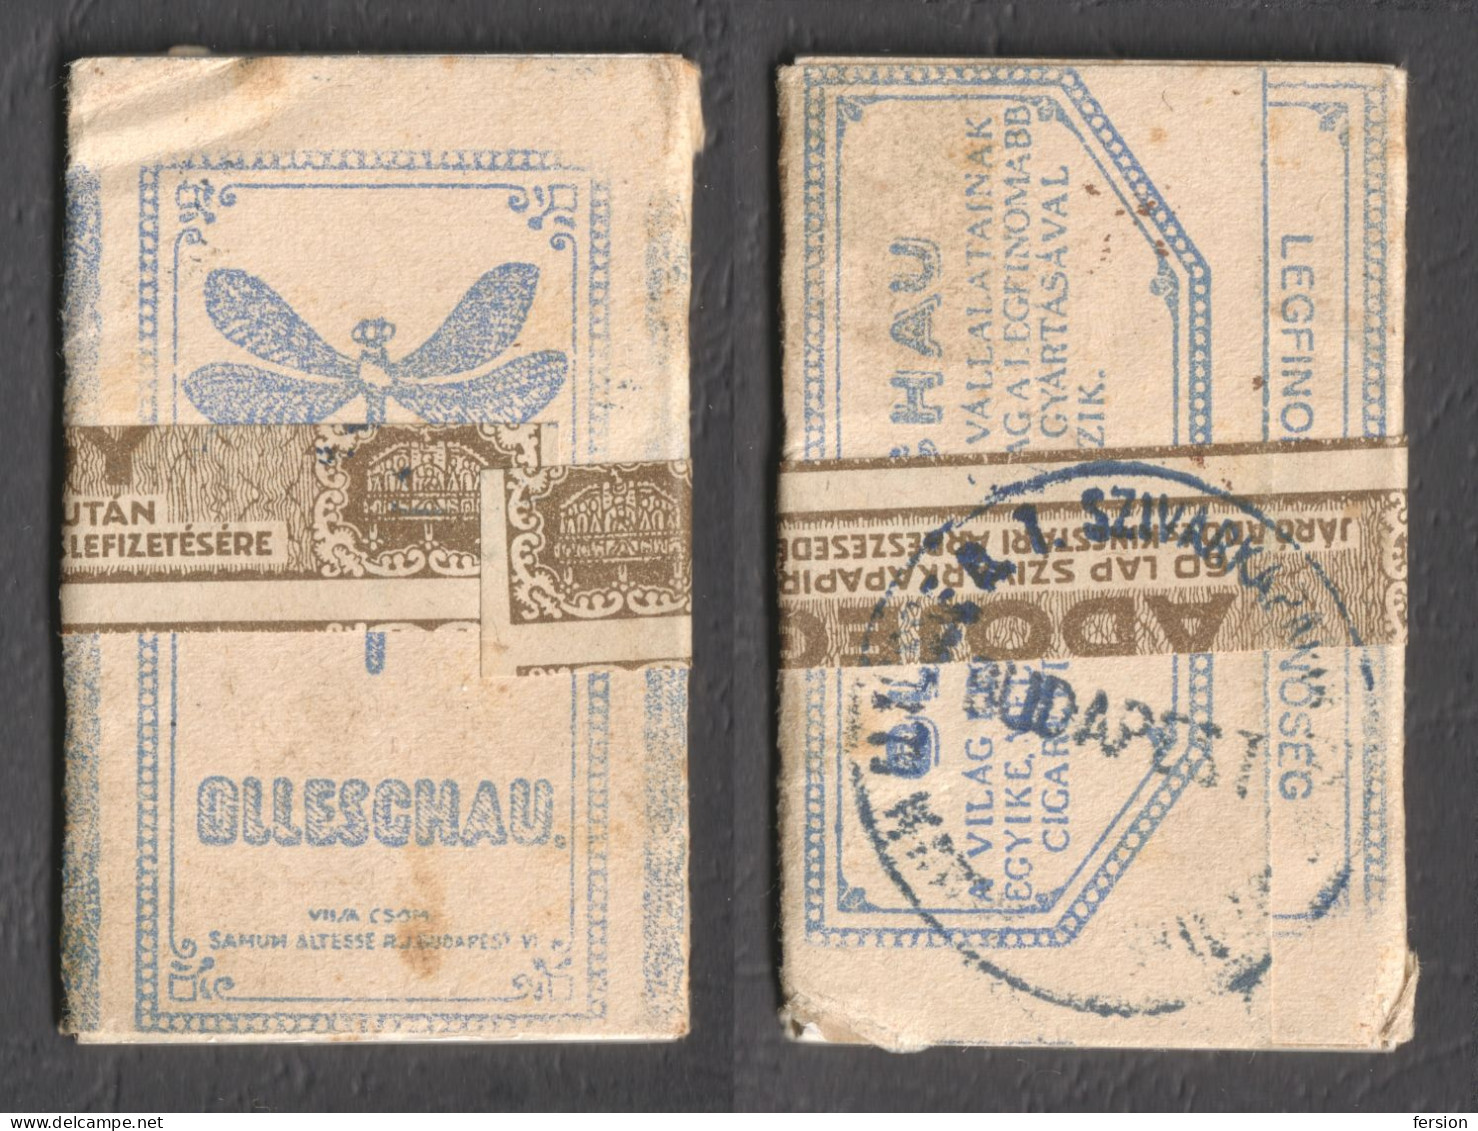 CIGARETTE TOBACCO Paper REVENUE Seal Fiscal Tax Stripe Hungary LABEL Cover Olleschau DRAGONFLY 1930 UNUSED Full Paper - Tabacco